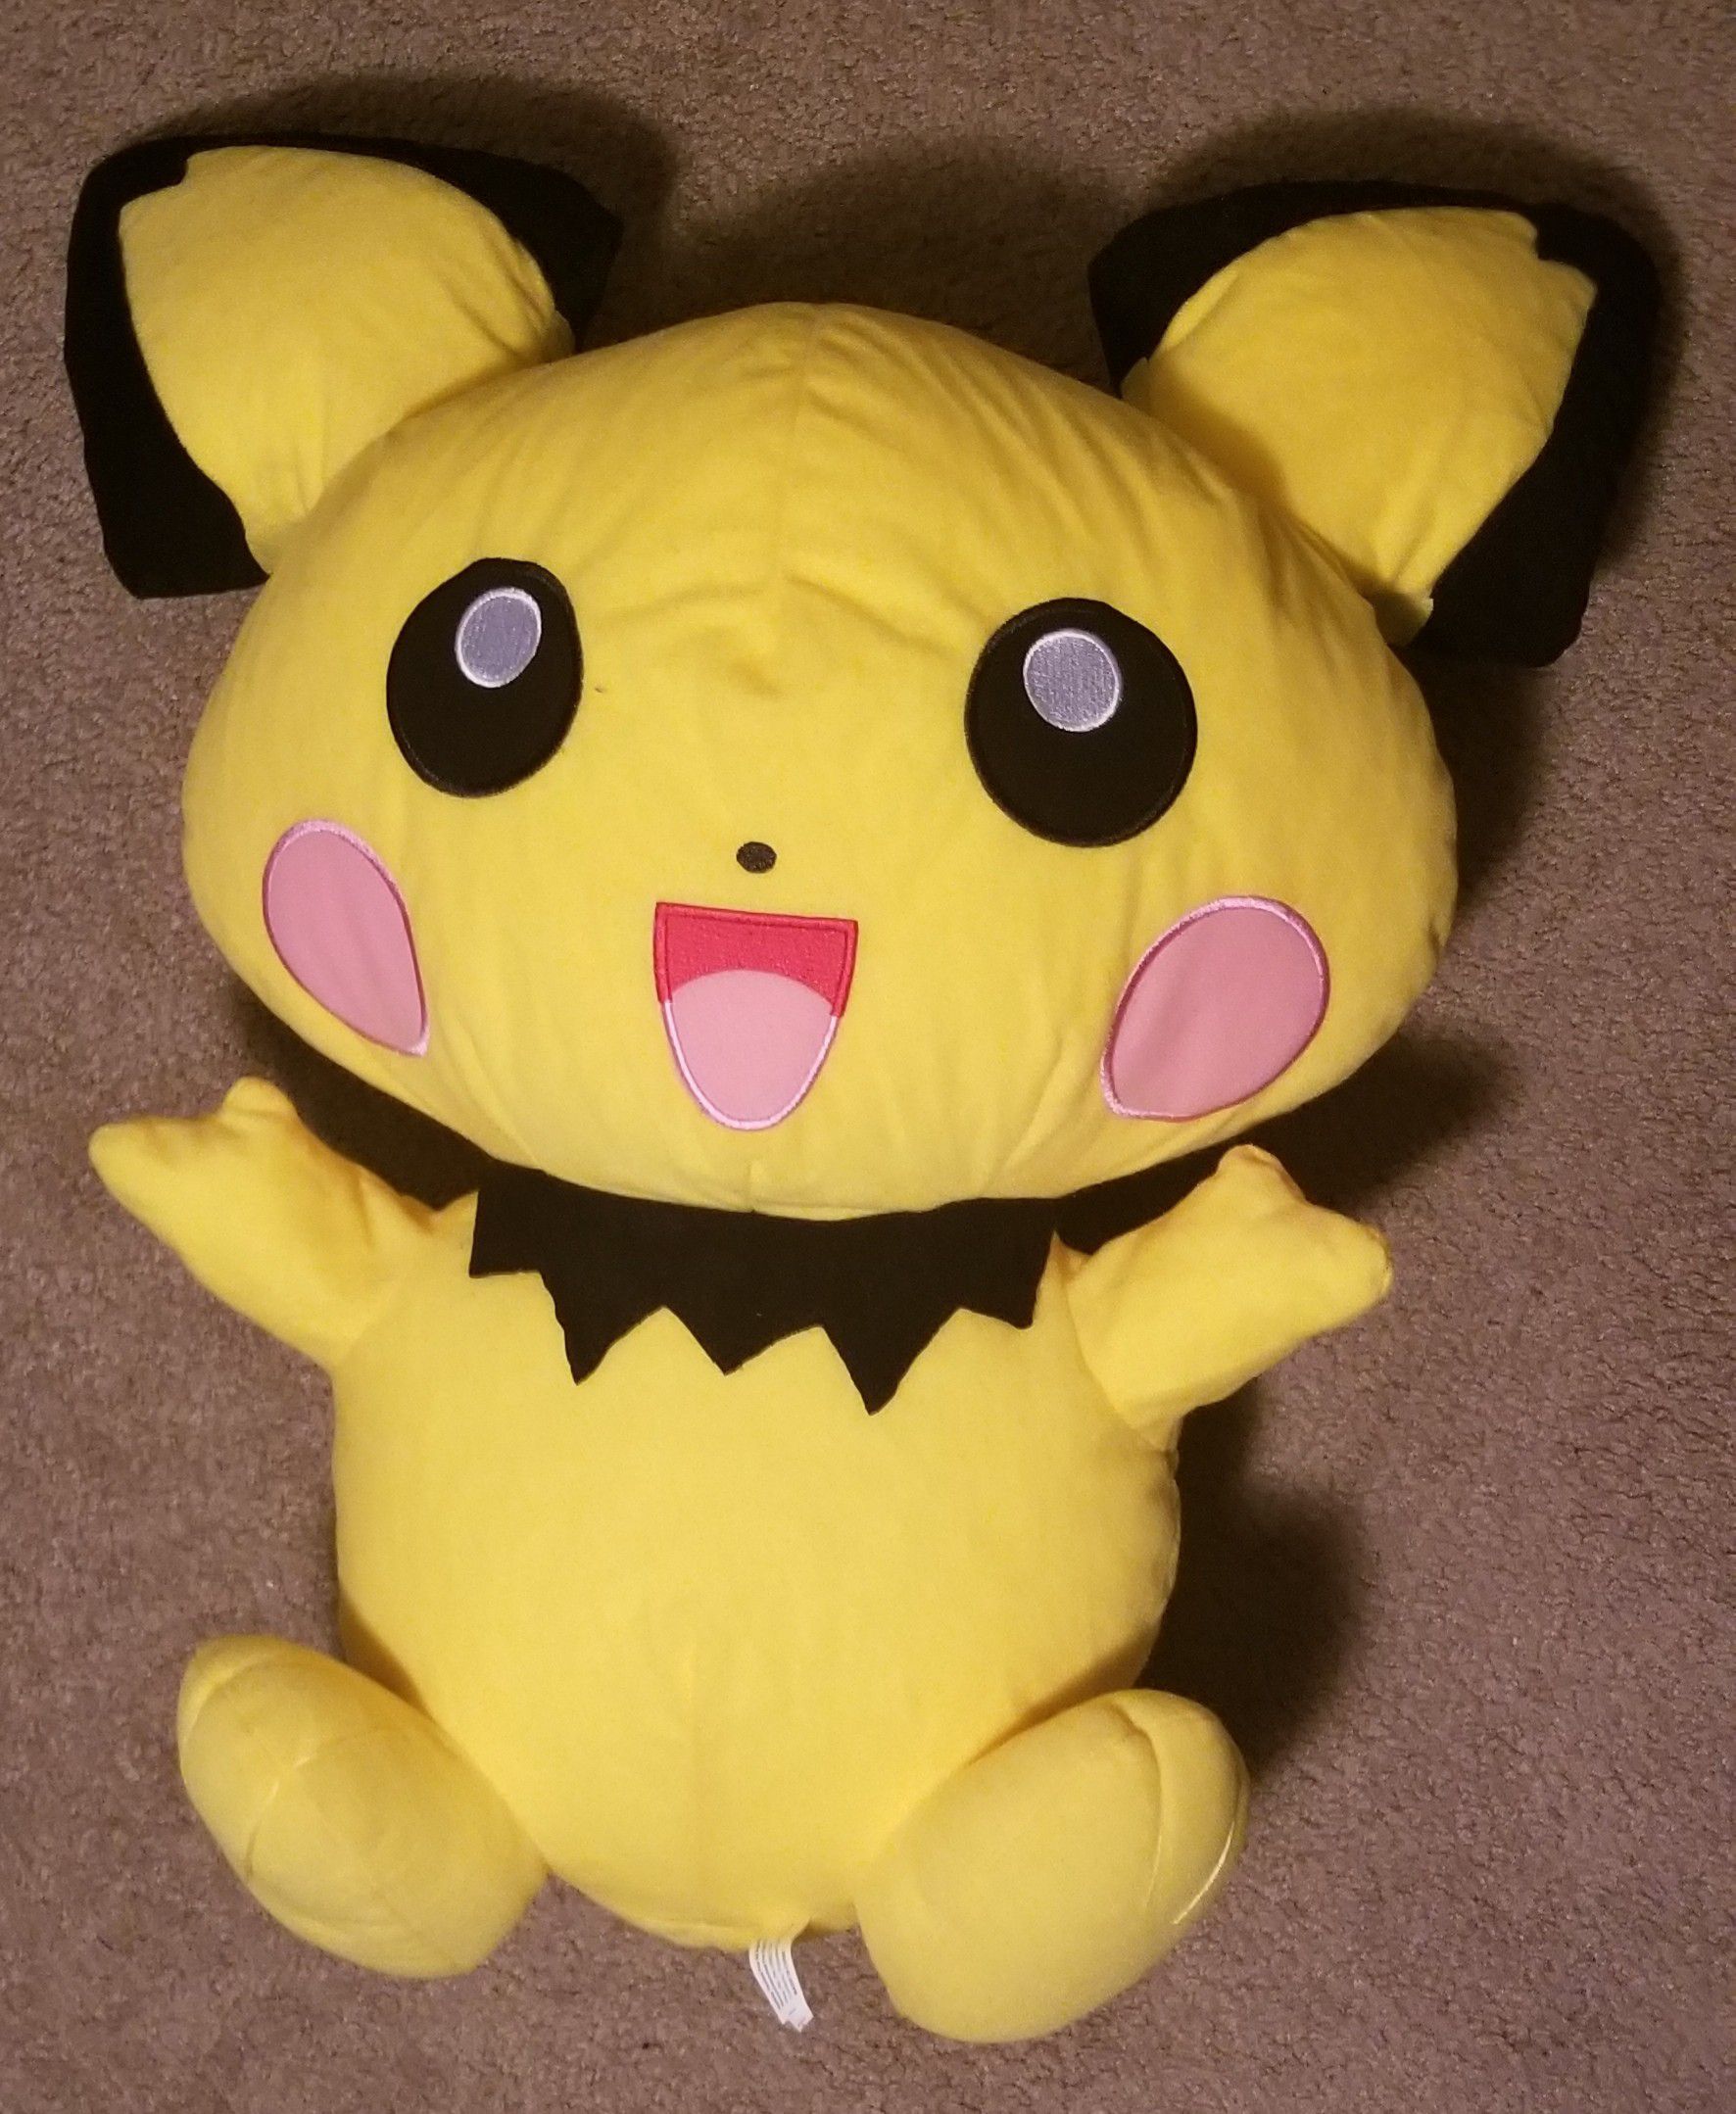 NEW!! Pokemon Pikachu and Hello Kitty 2ft tall plush stuffed animals - 3 items total